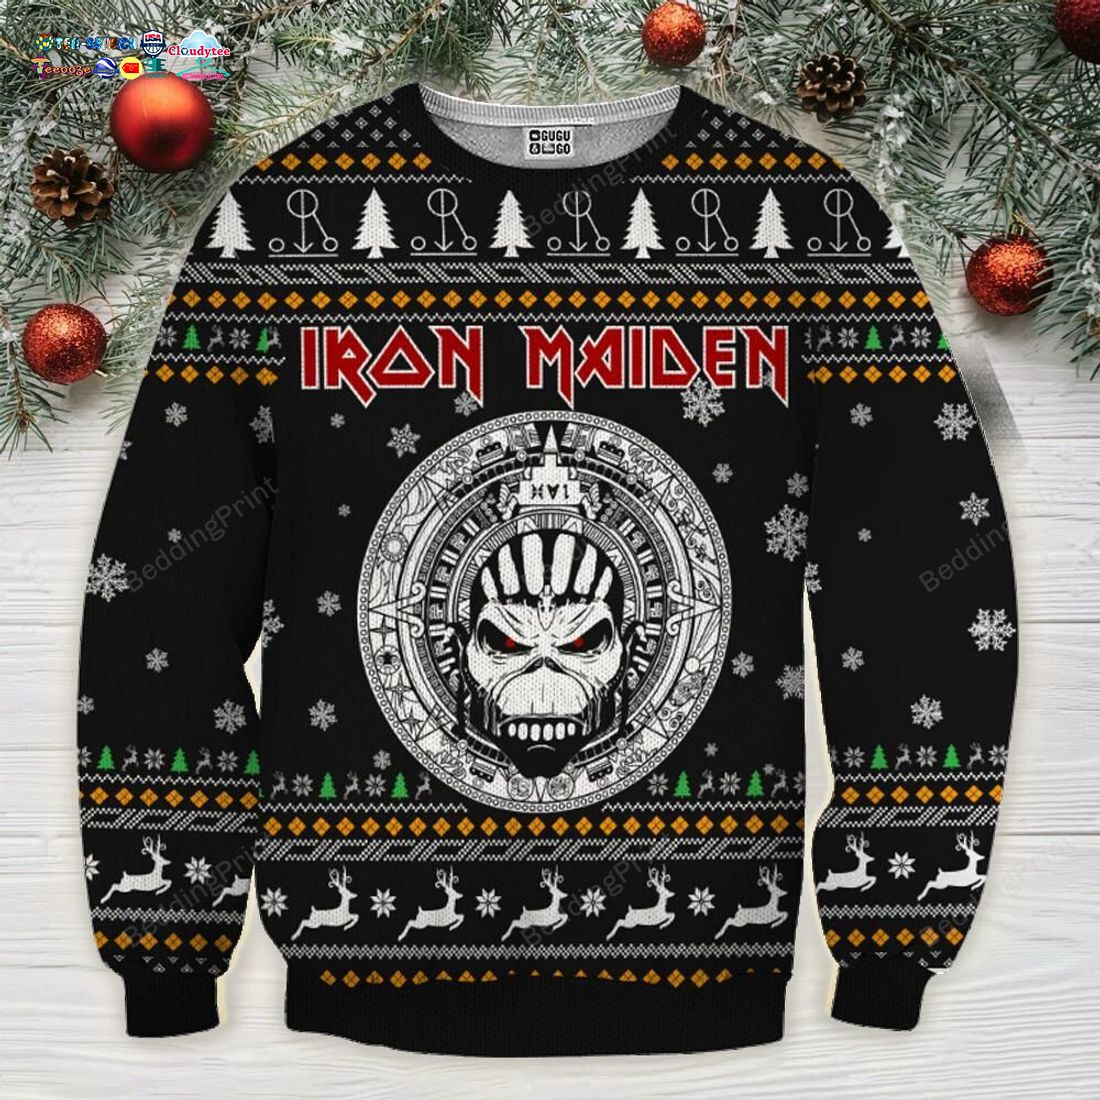 Iron Maiden Ugly Christmas Sweater - Nice bread, I like it